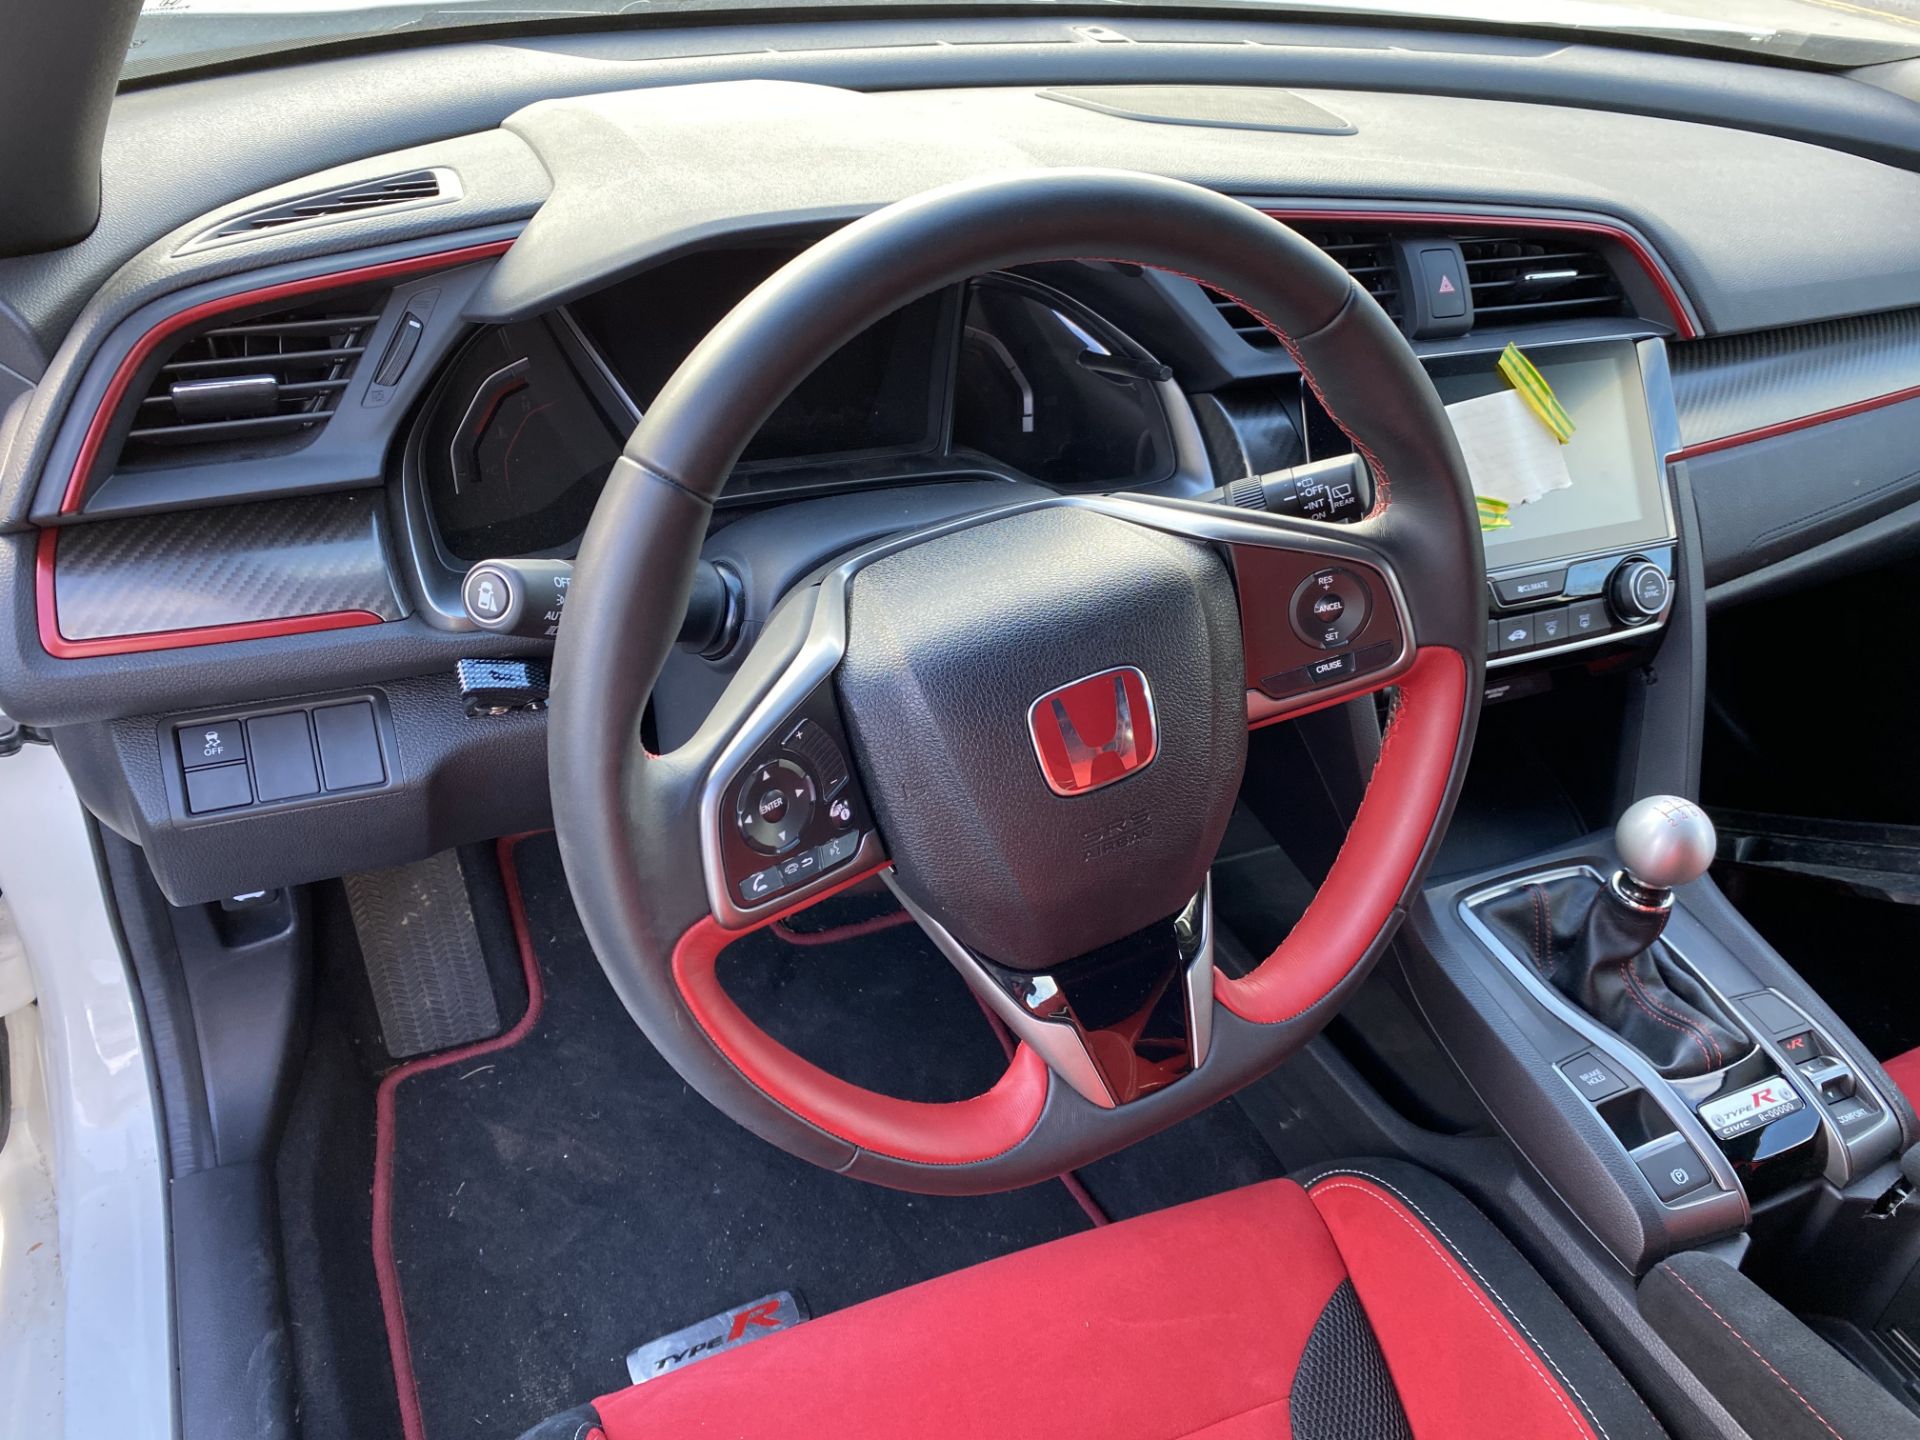 Honda Civic FK8 type R left hand drive race car, White paint finish, 2017 build, standard Type R - Image 9 of 21